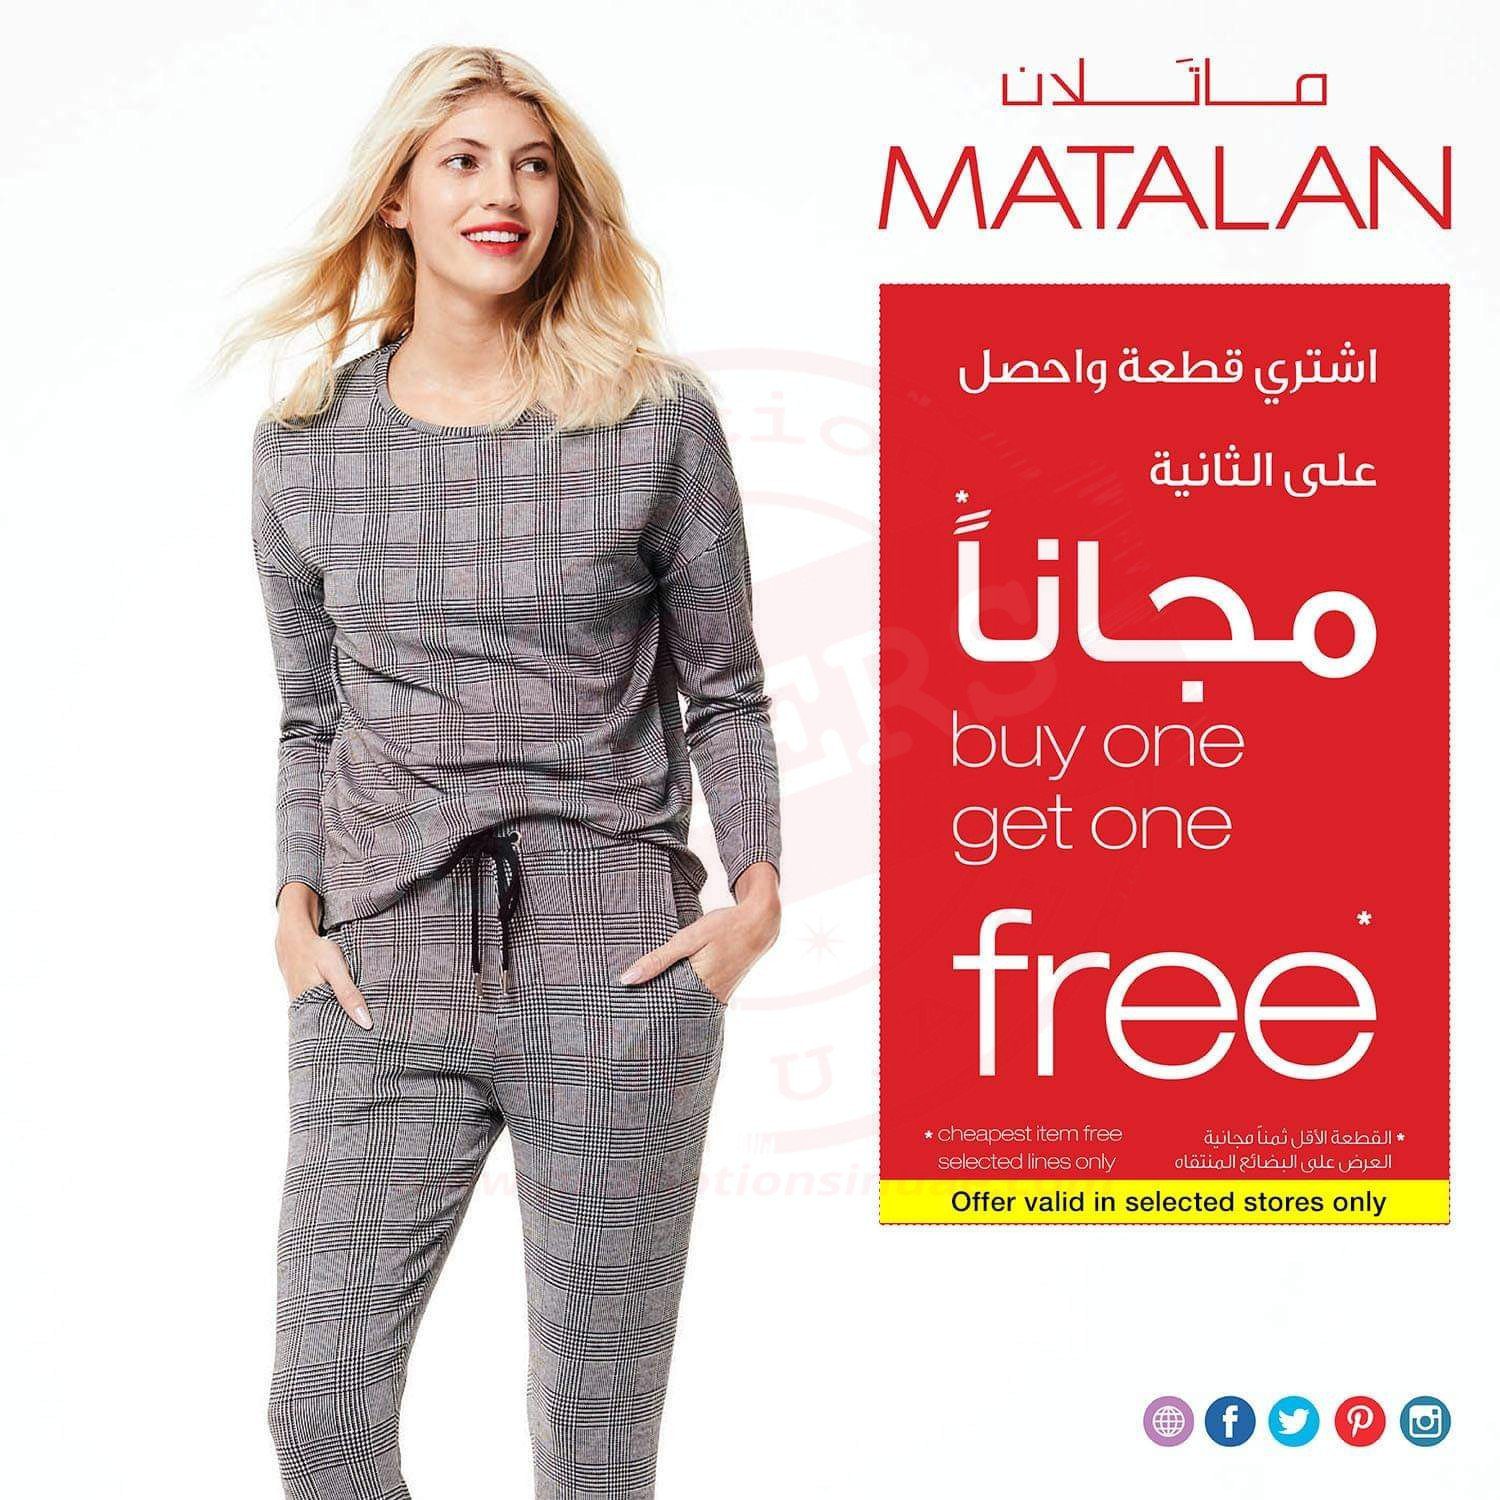 It’s Buy 1 Get 1 Free at MATALAN!!